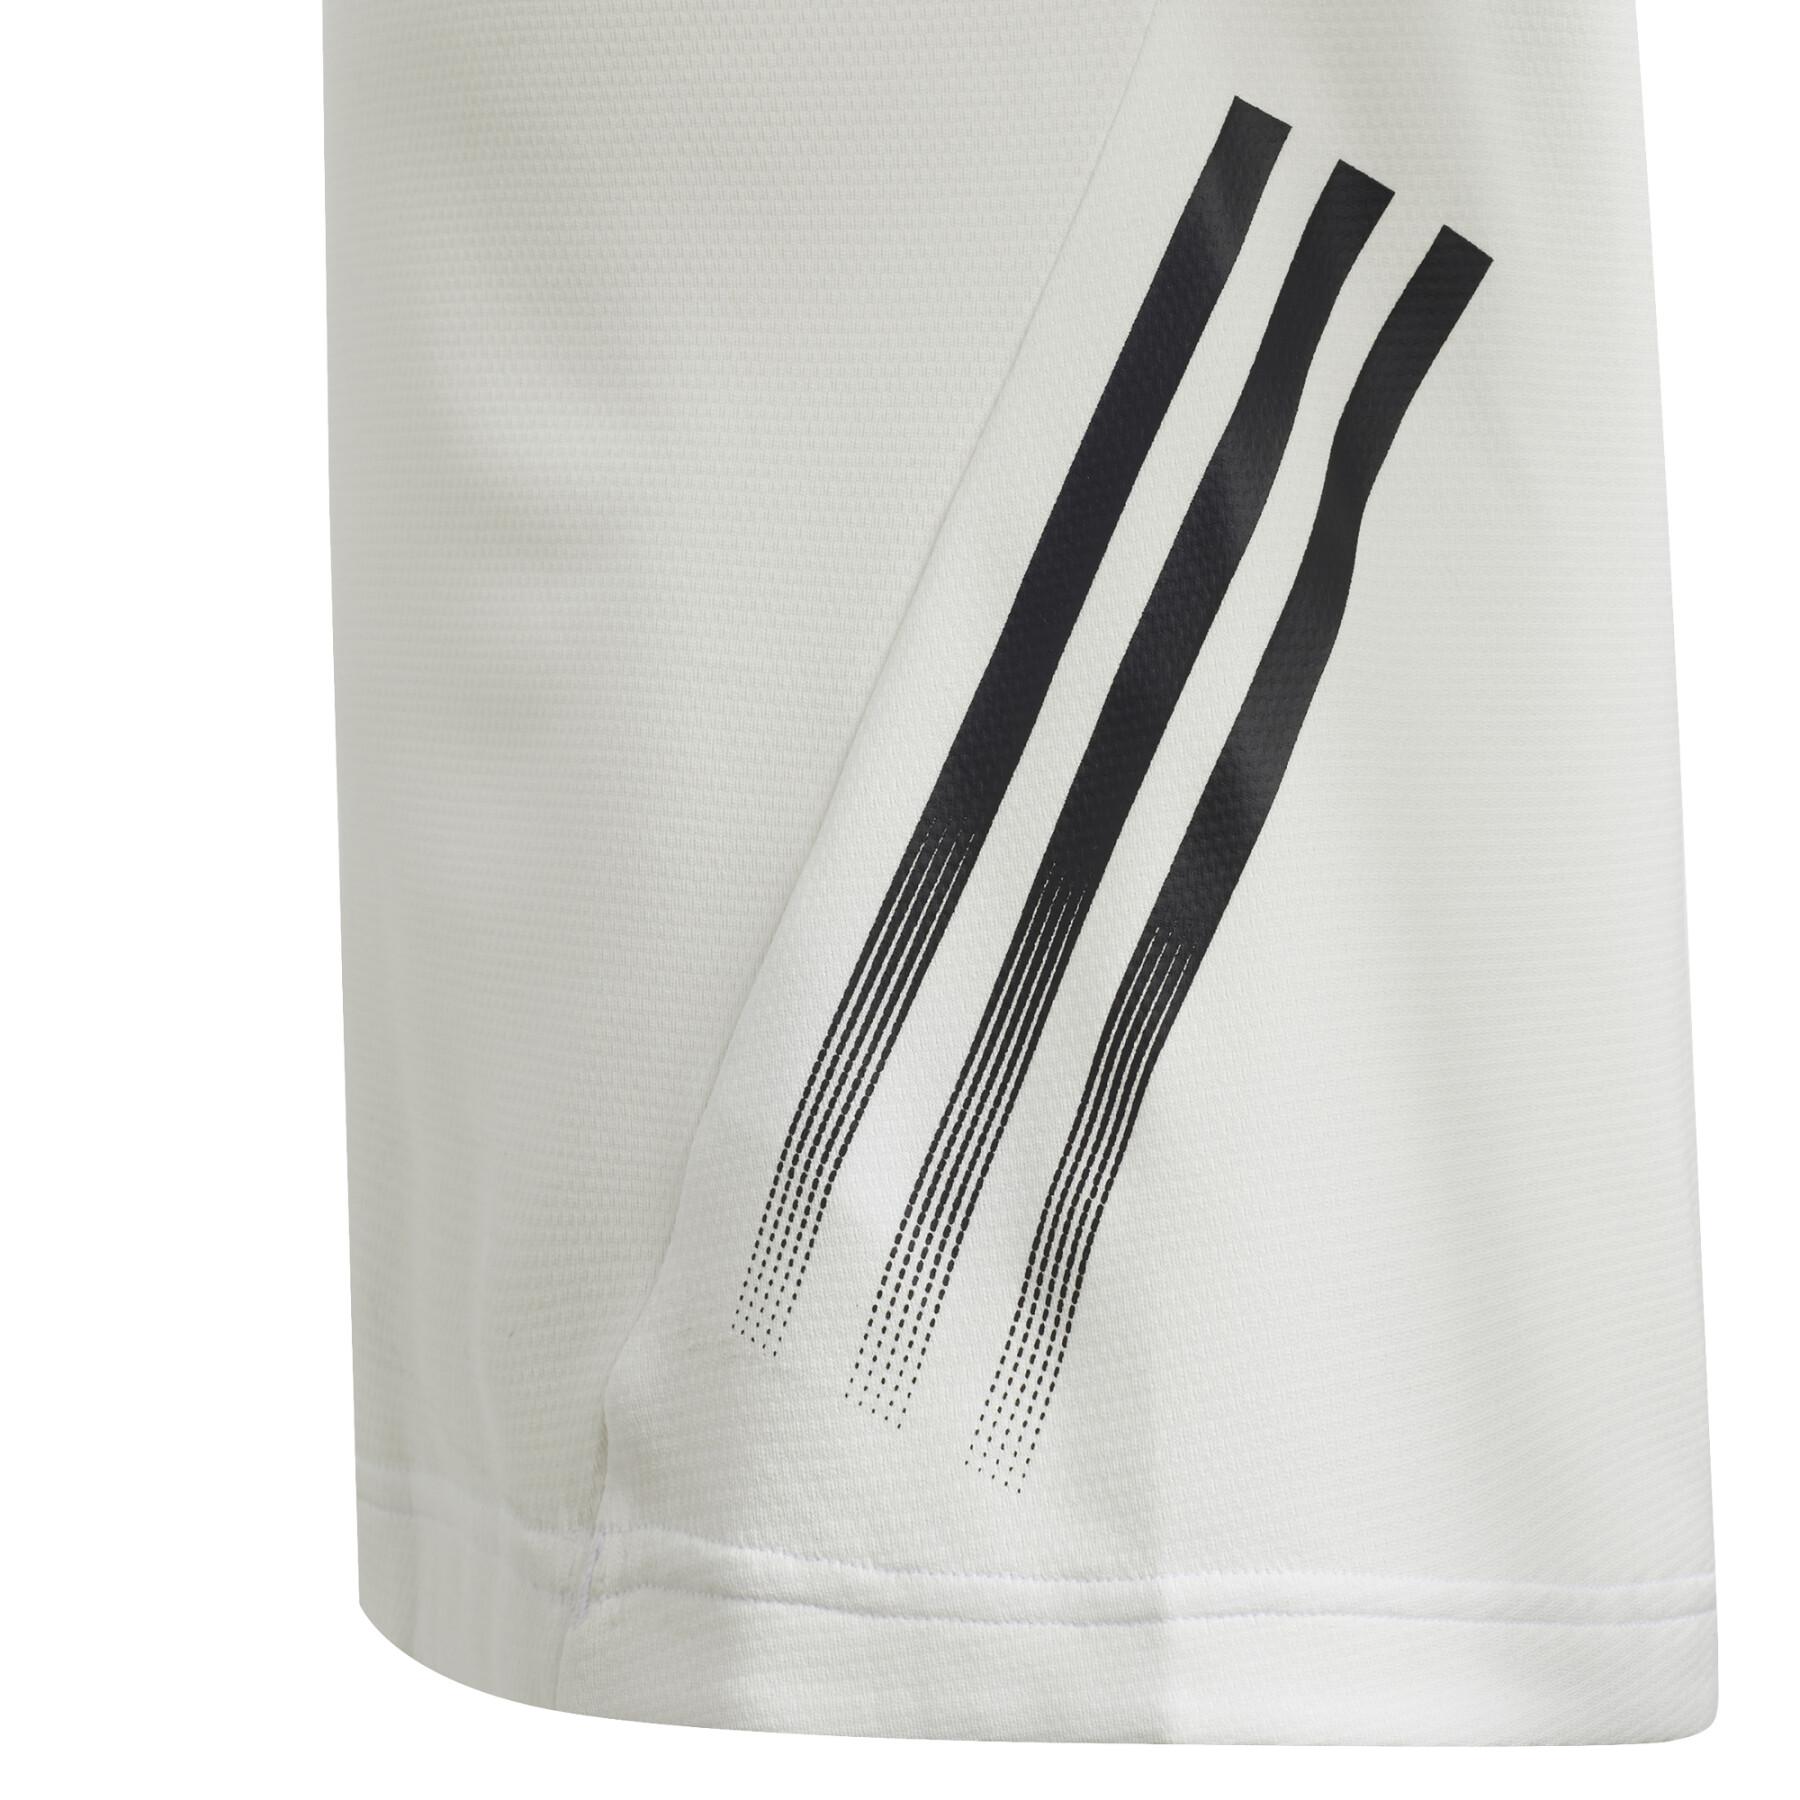 Meisjes-T-shirt adidas Aeroready 3-Stripes